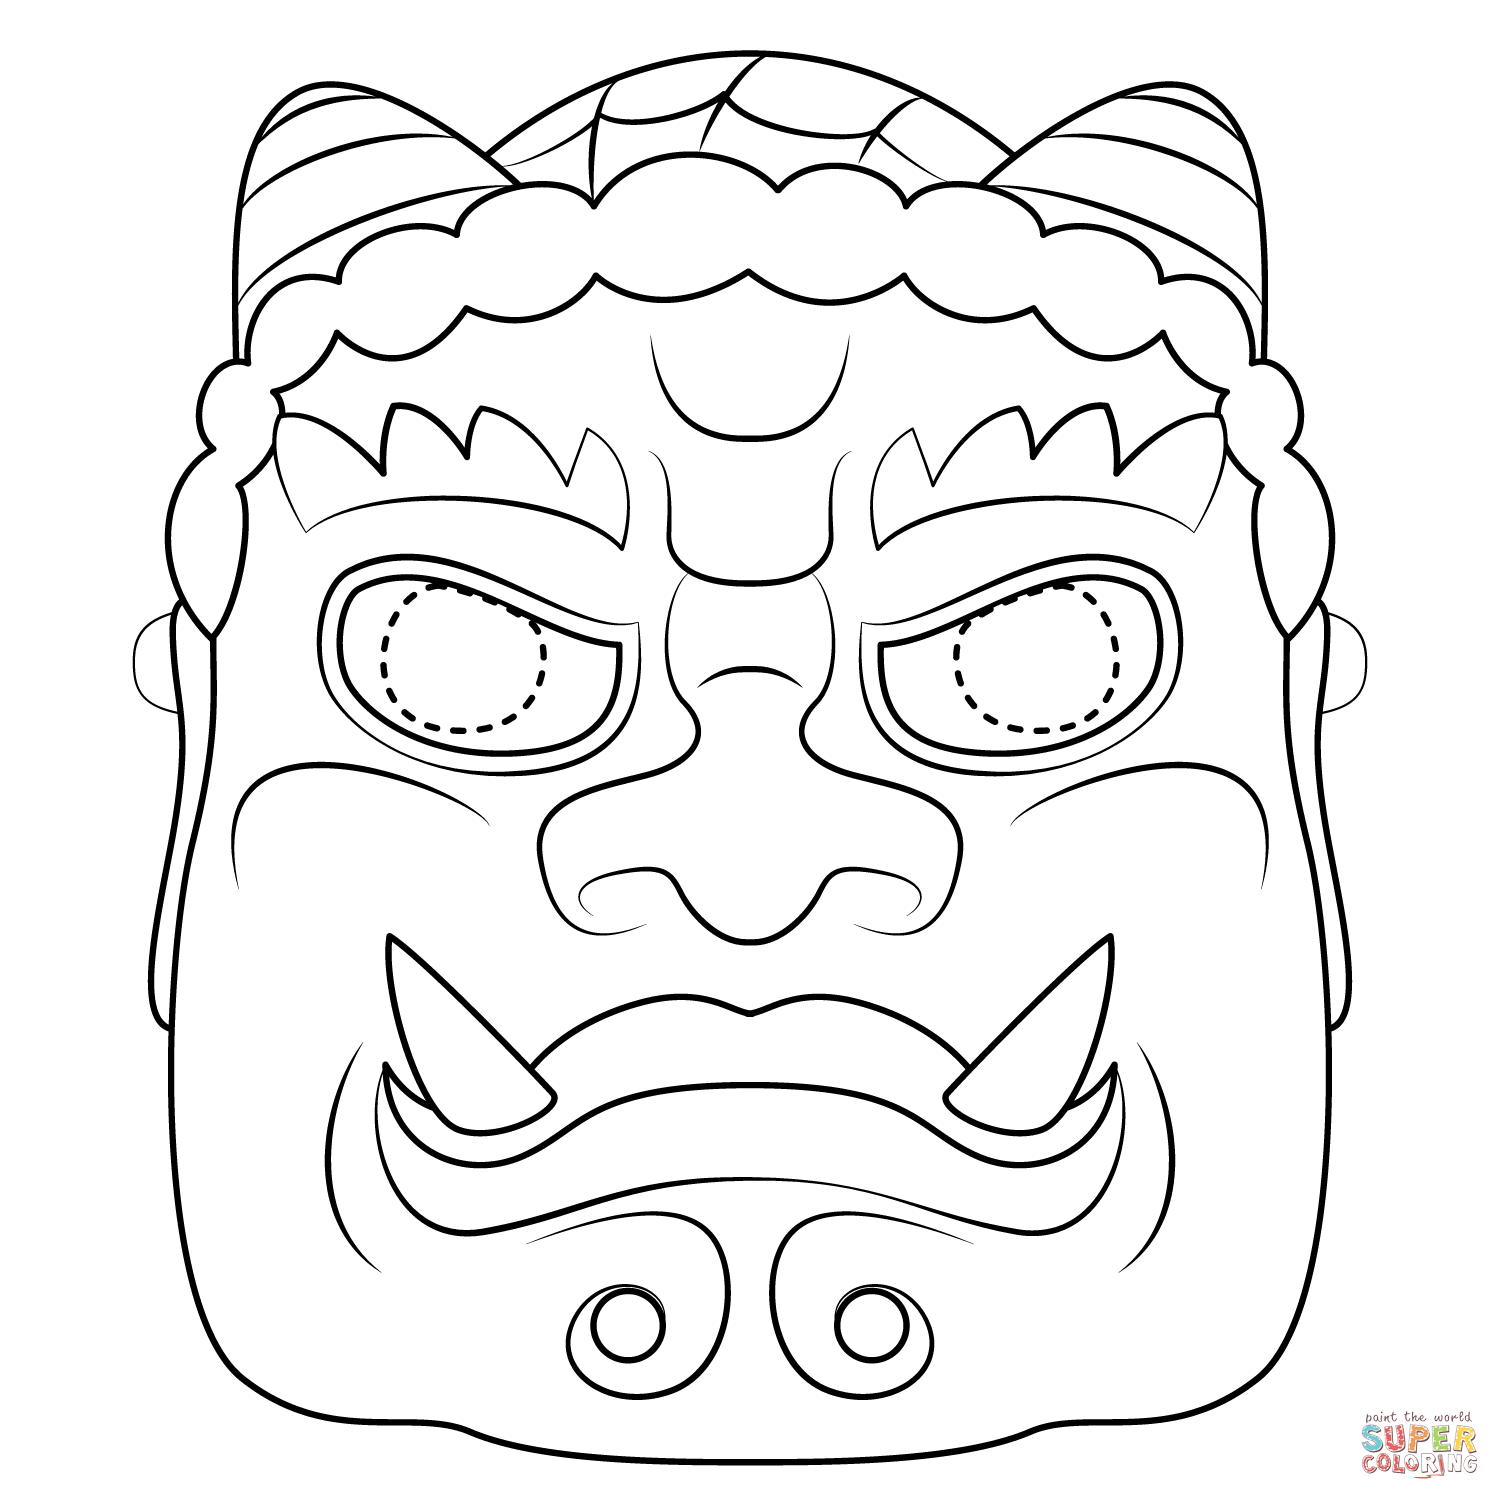 Setsubun Mask coloring page | Free Printable Coloring Pages